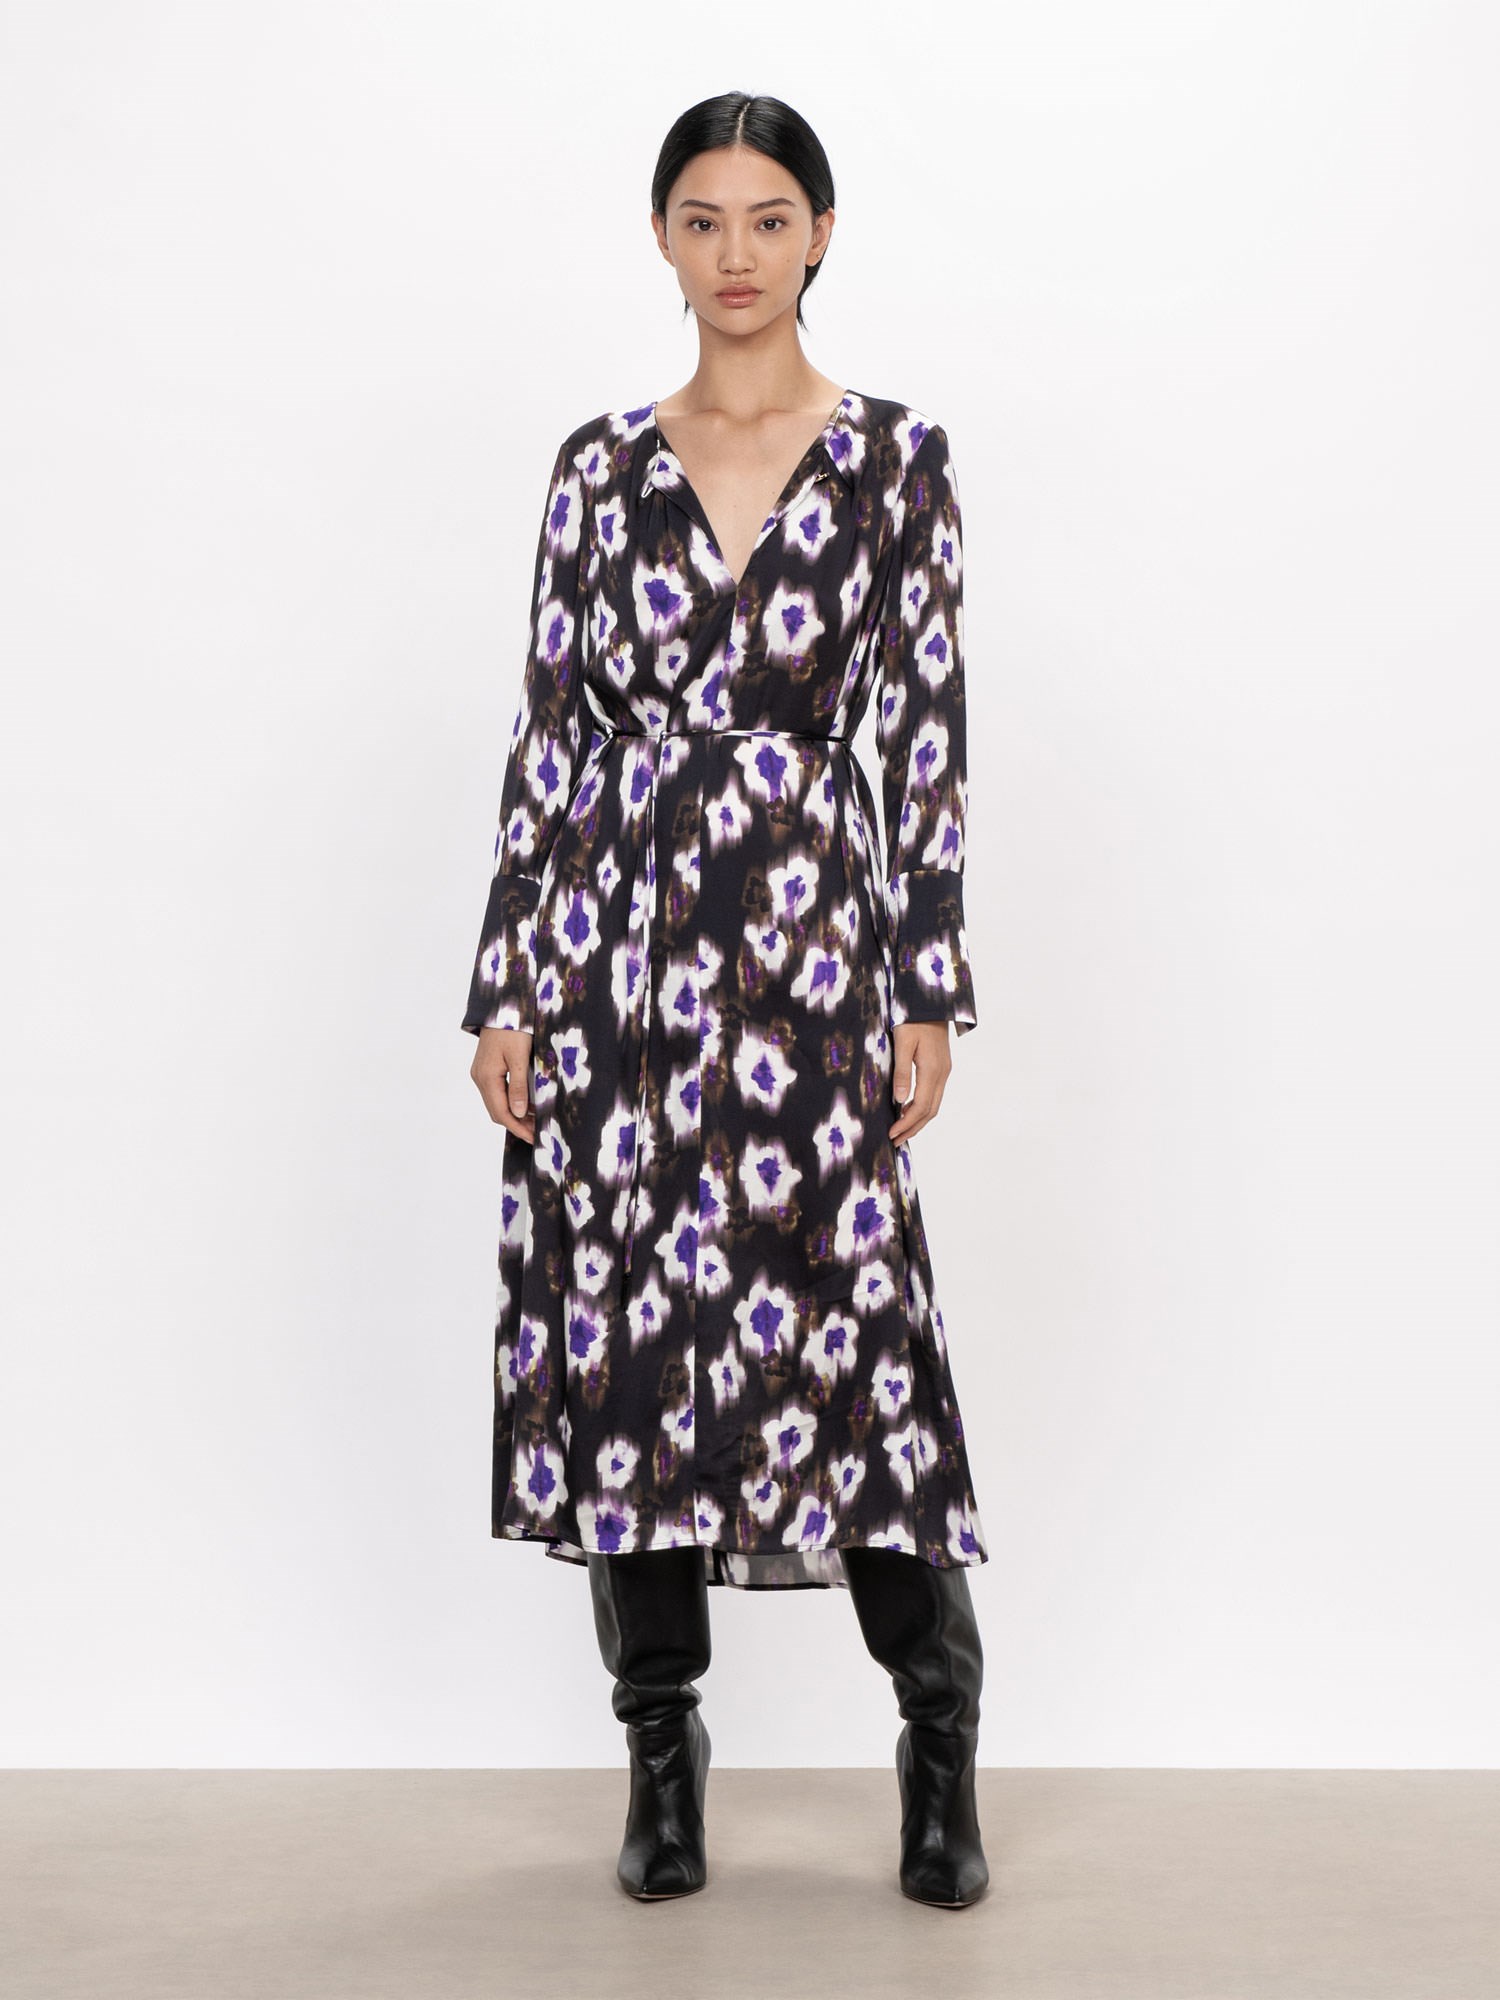 Ultraviolet Satin Dress | Buy Dresses Online - Veronika Maine